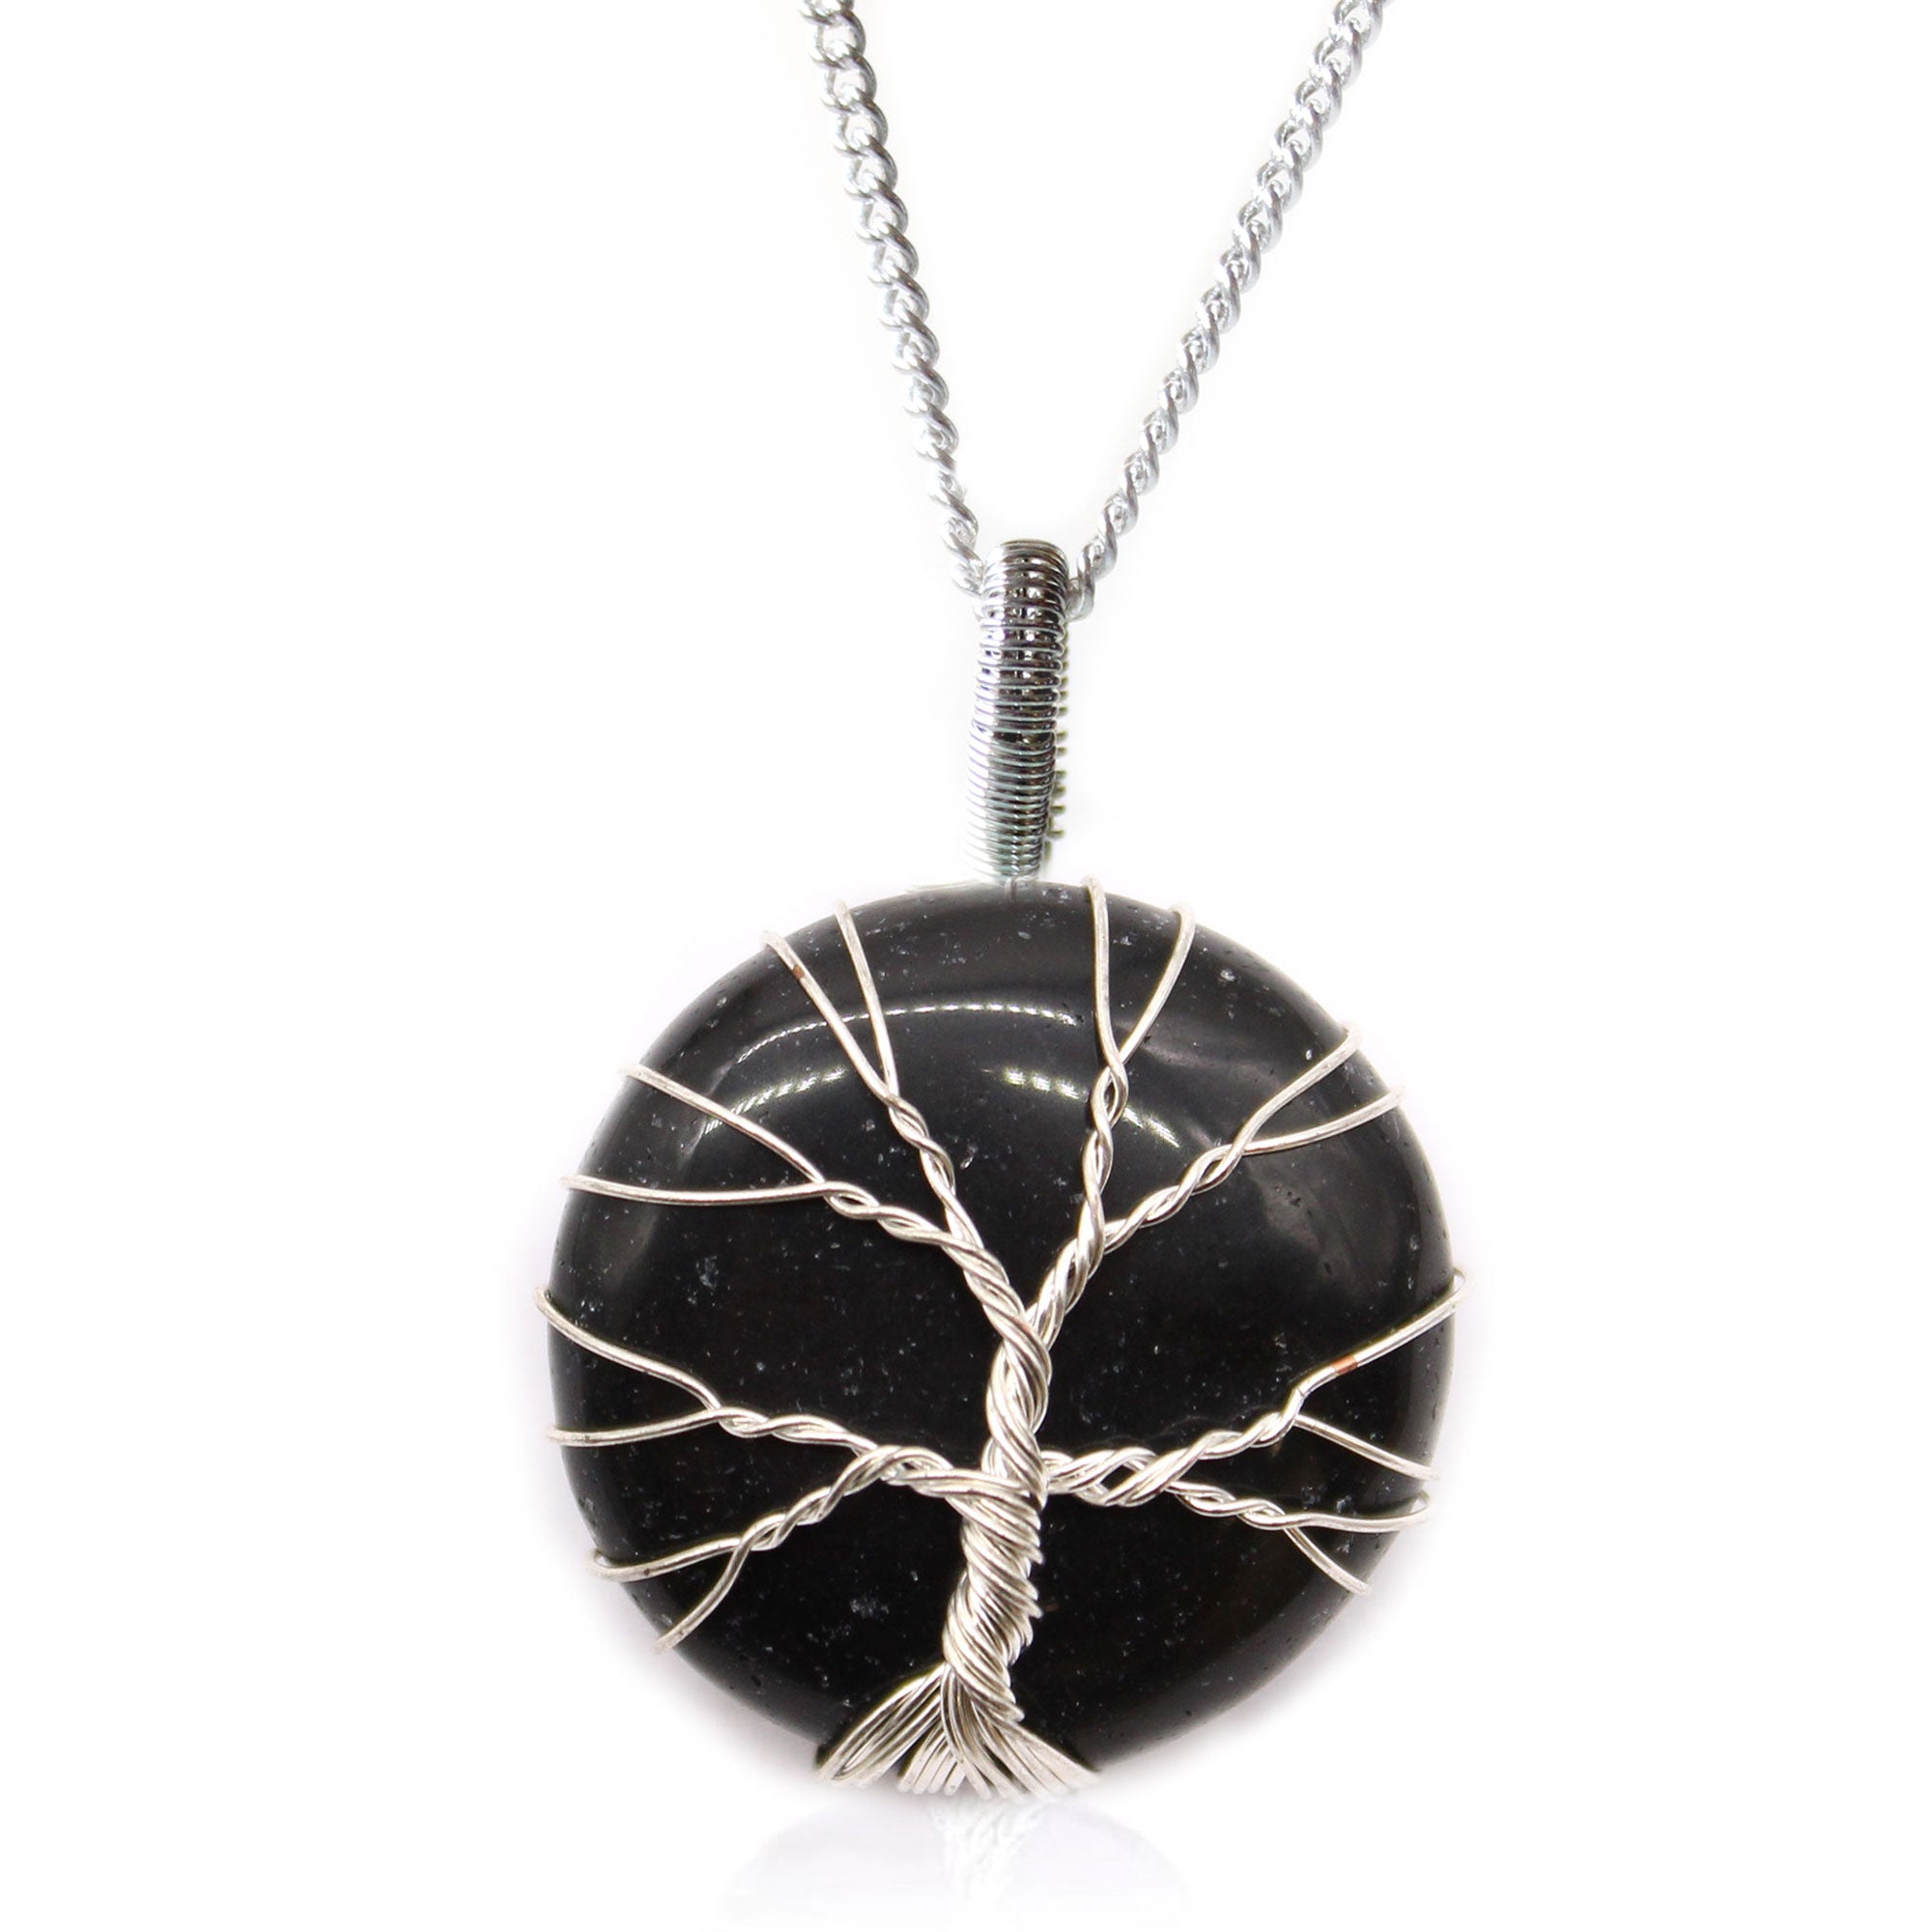 View Tree of Life Gemstone Necklace Black Onyx information